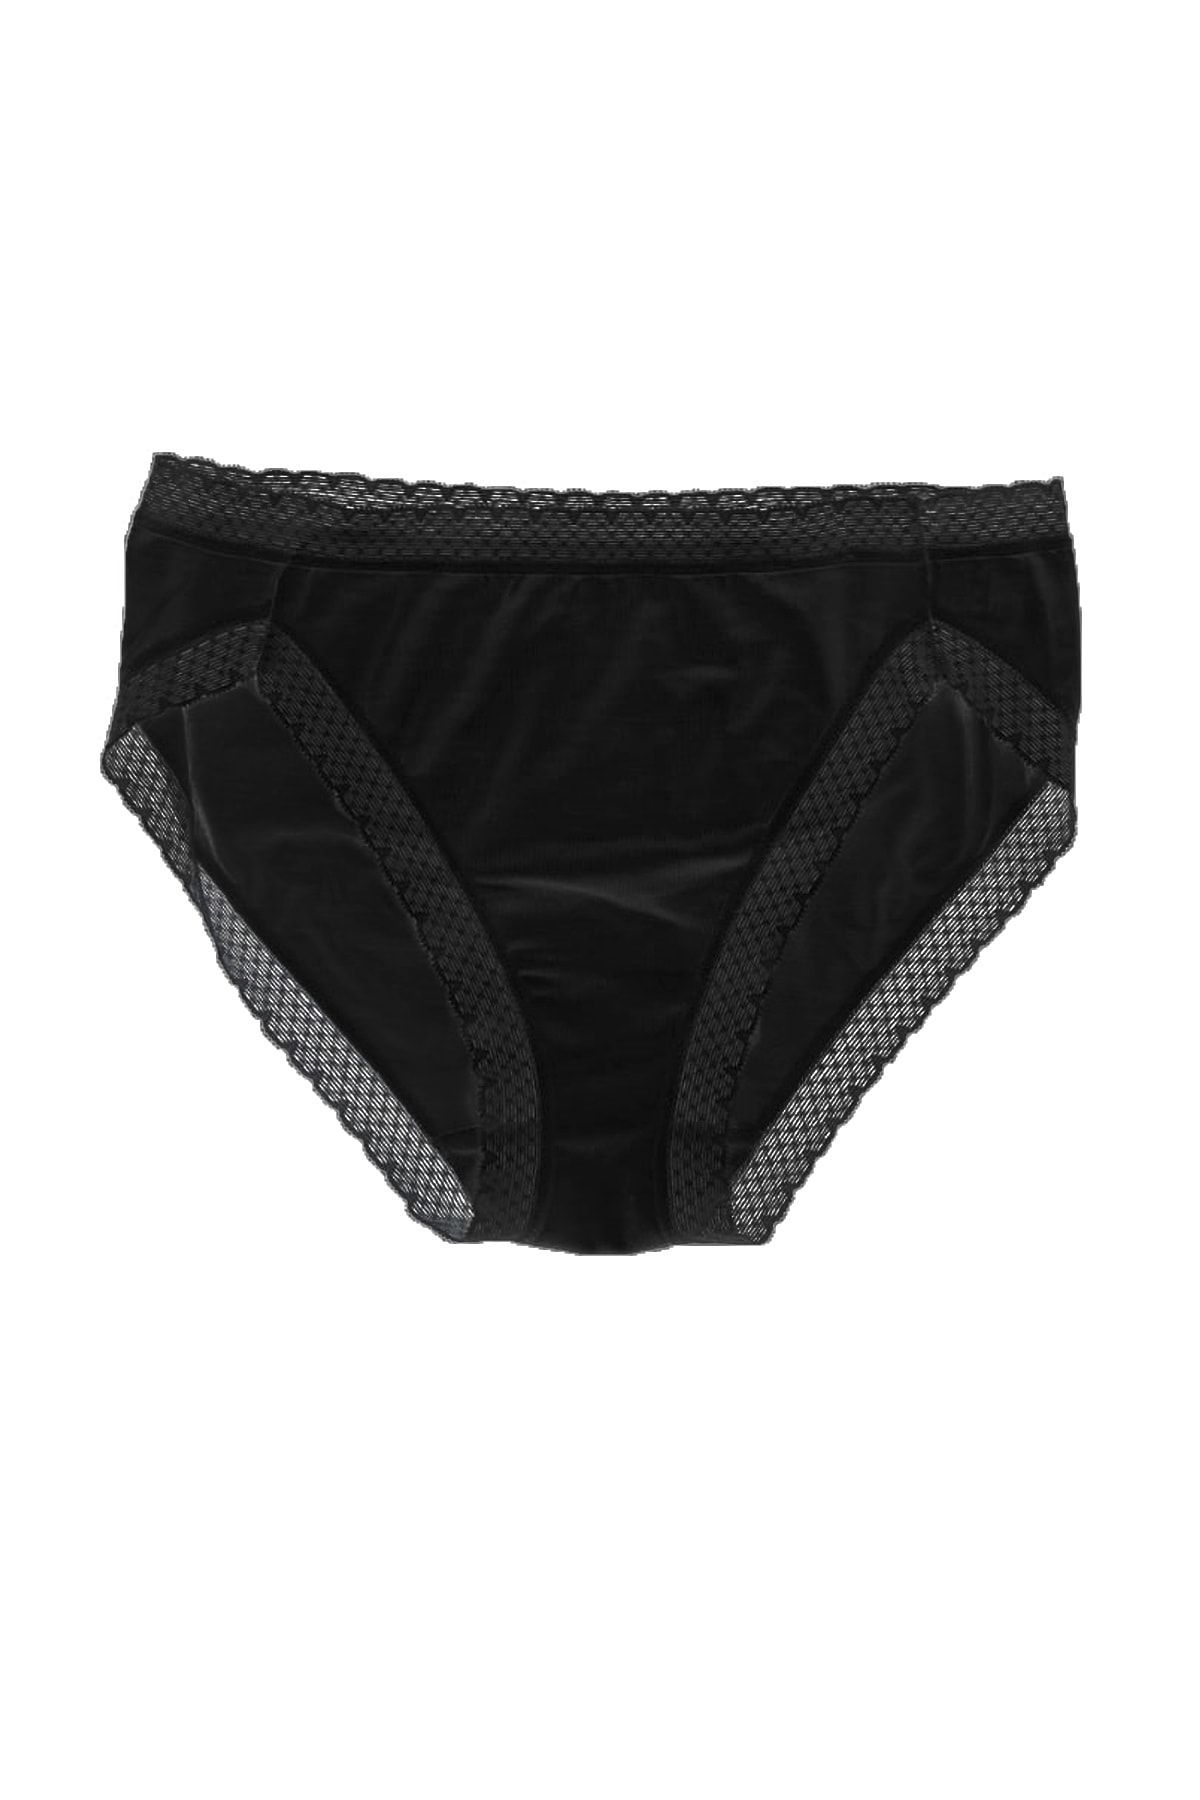 fsm1453 Women's Modal Normal Waist Bikini Lace Slip Lycra Panties